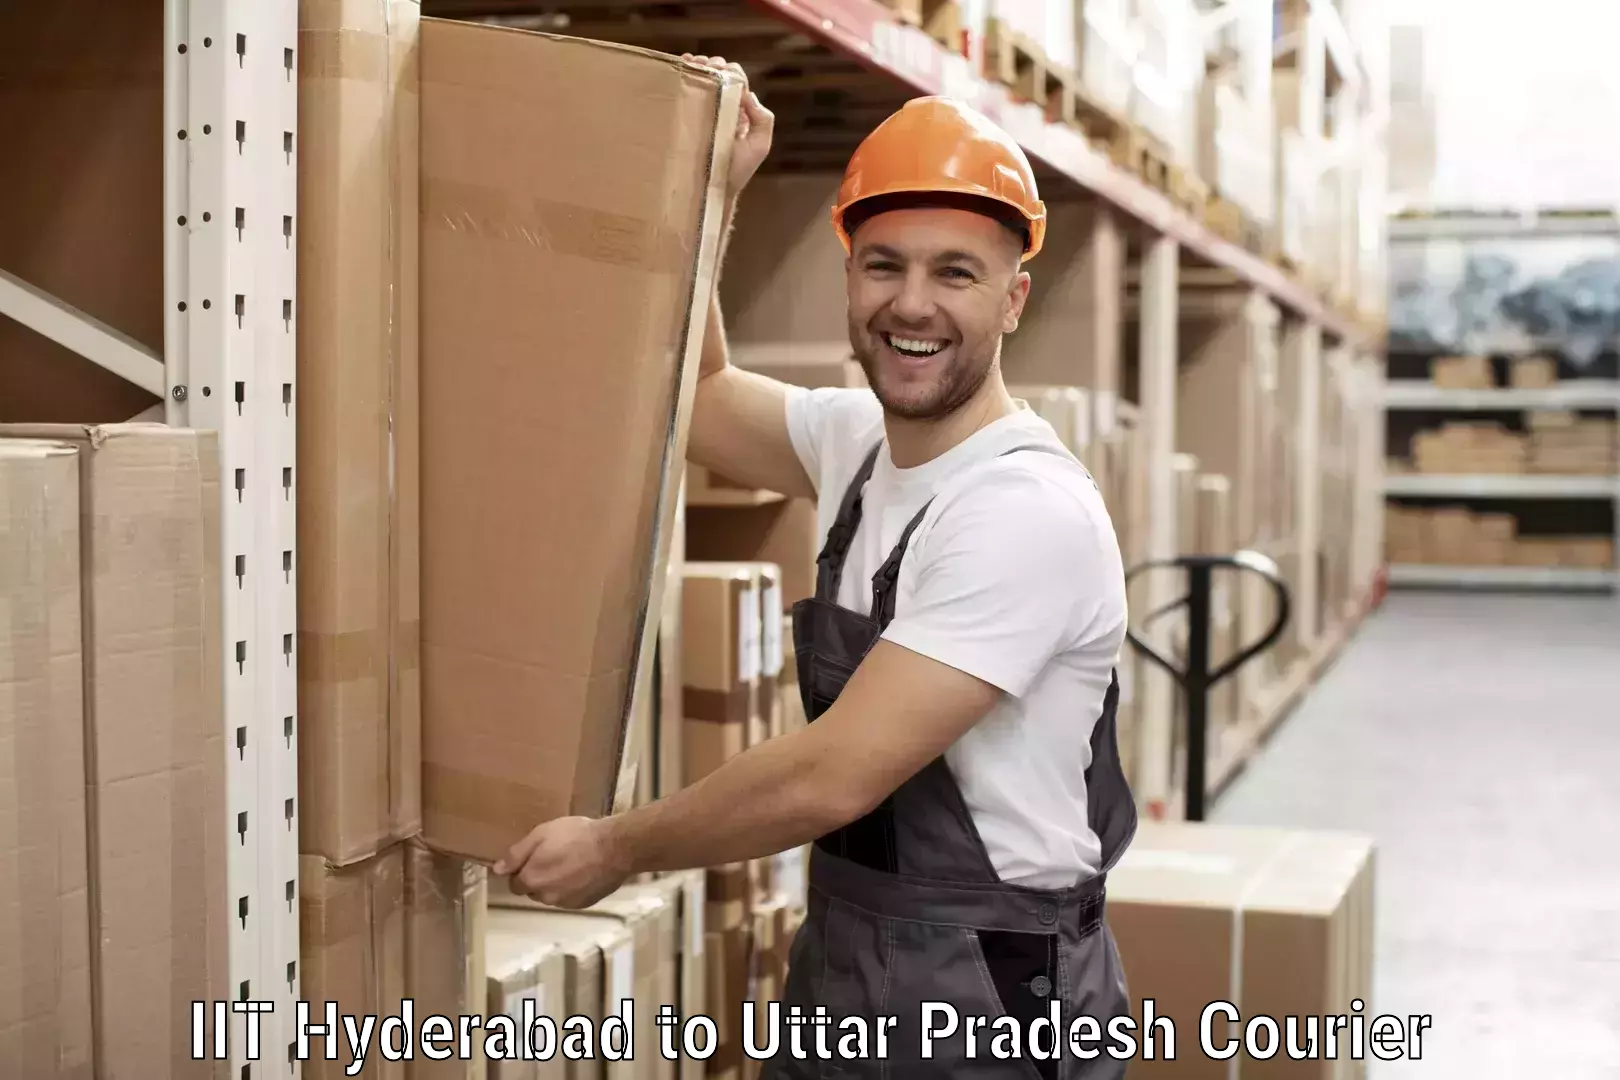 User-friendly delivery service IIT Hyderabad to Phephna